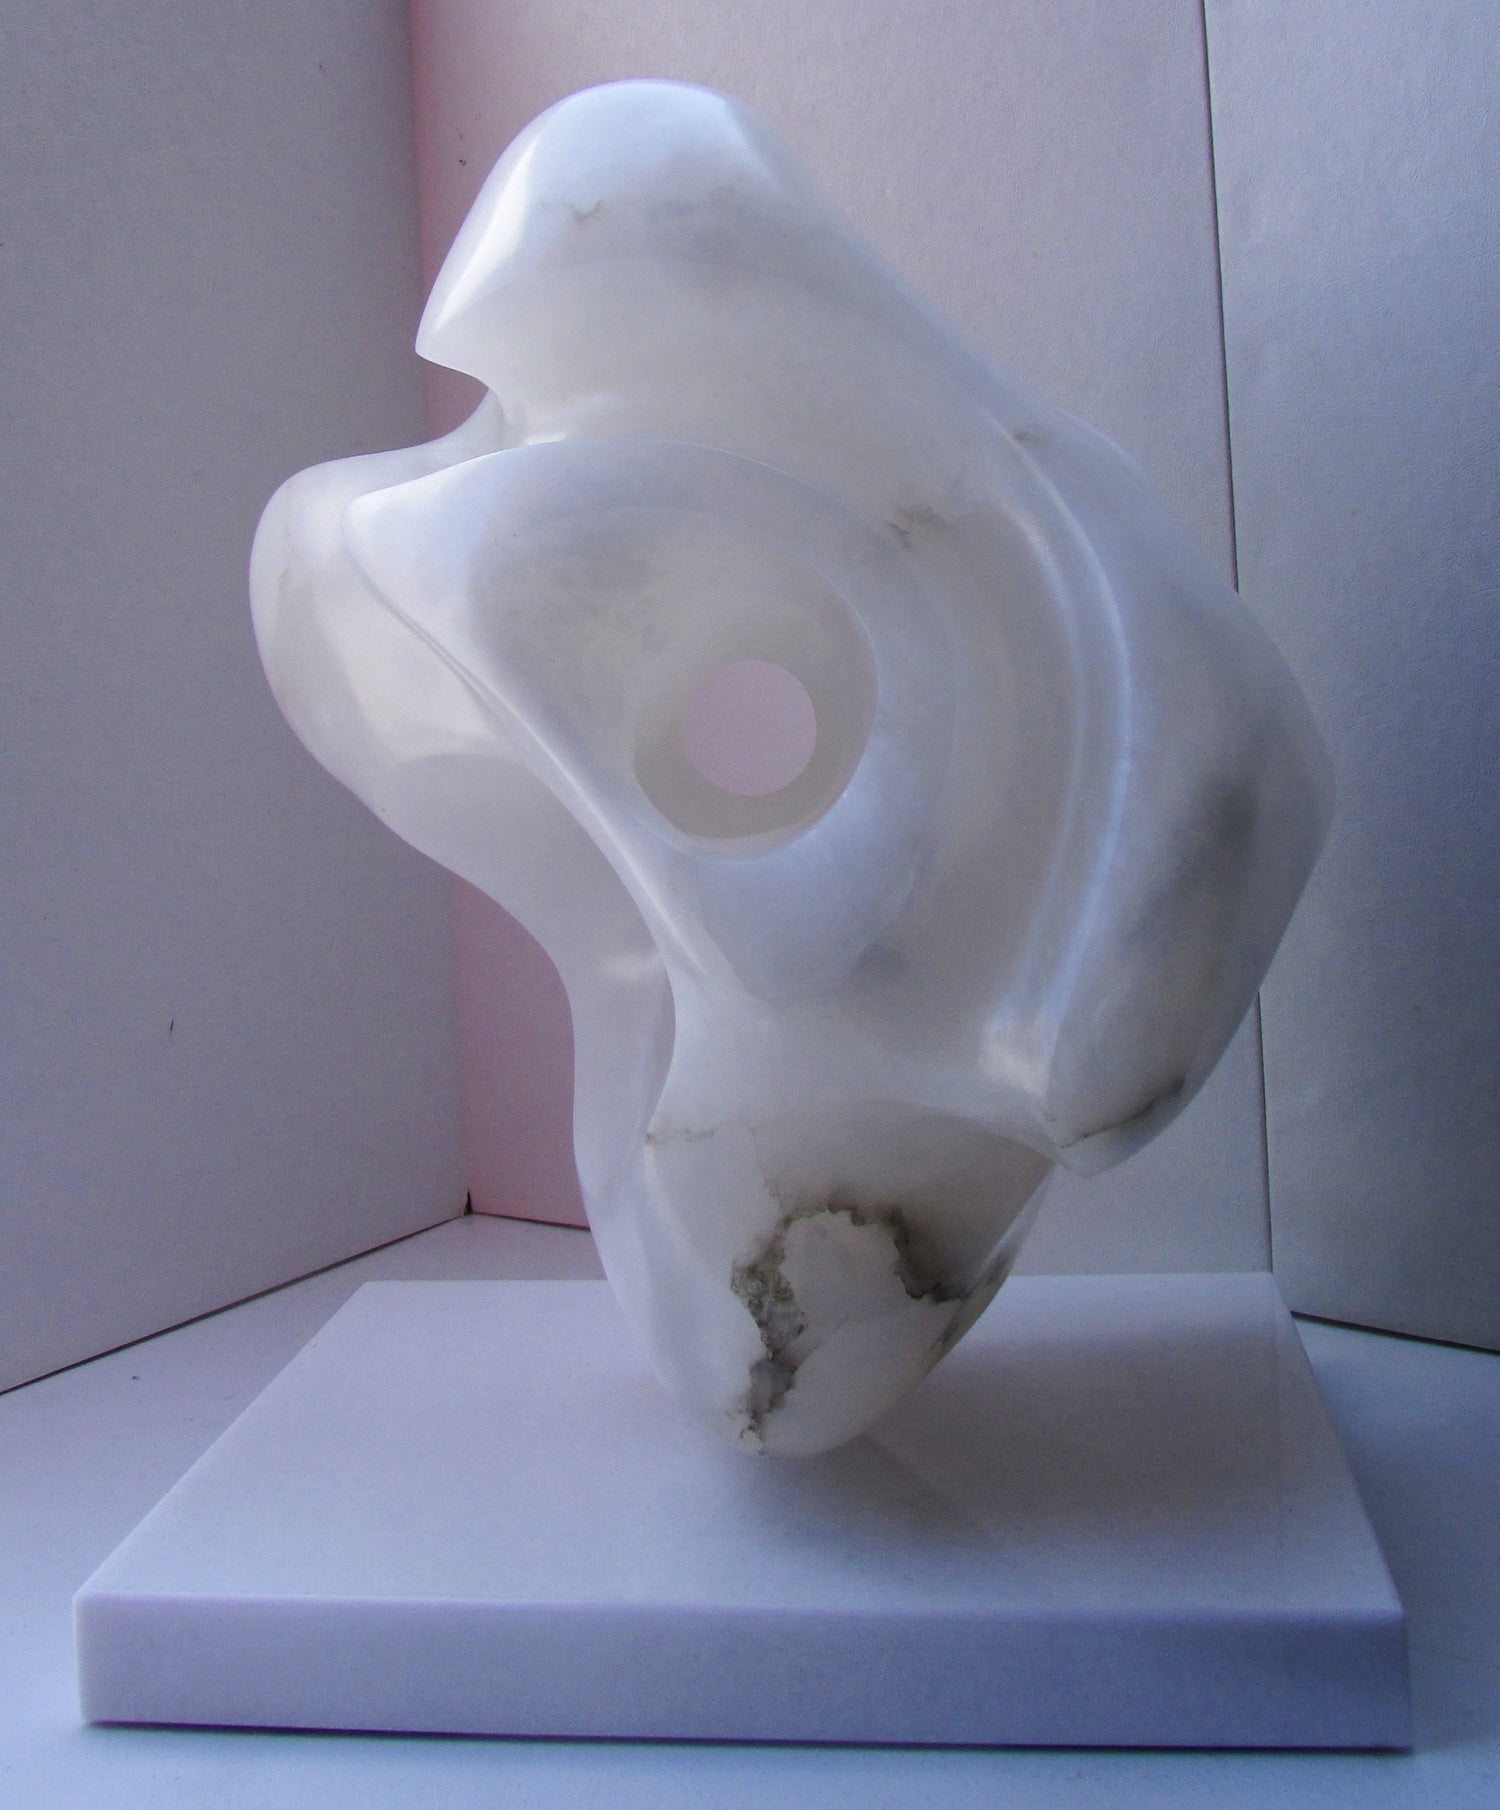 Amorphous Alabaster Sculpture Attributed to Ilona Passino